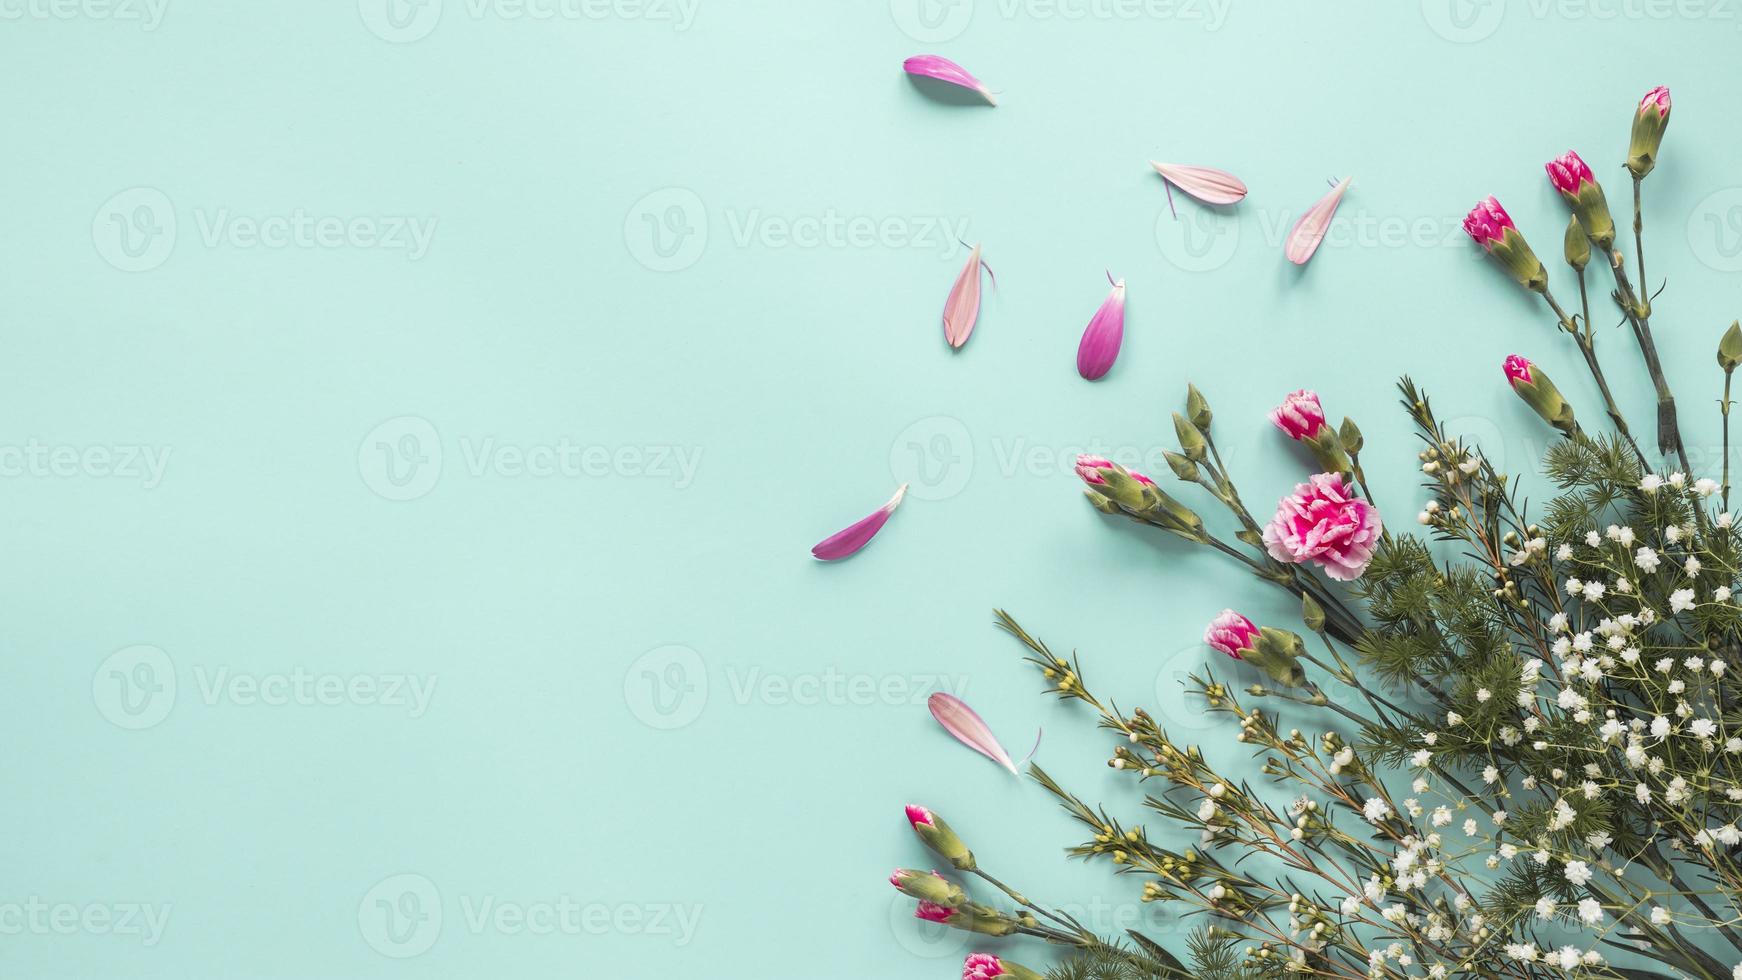 flores rosadas con mesa de ramas de plantas foto